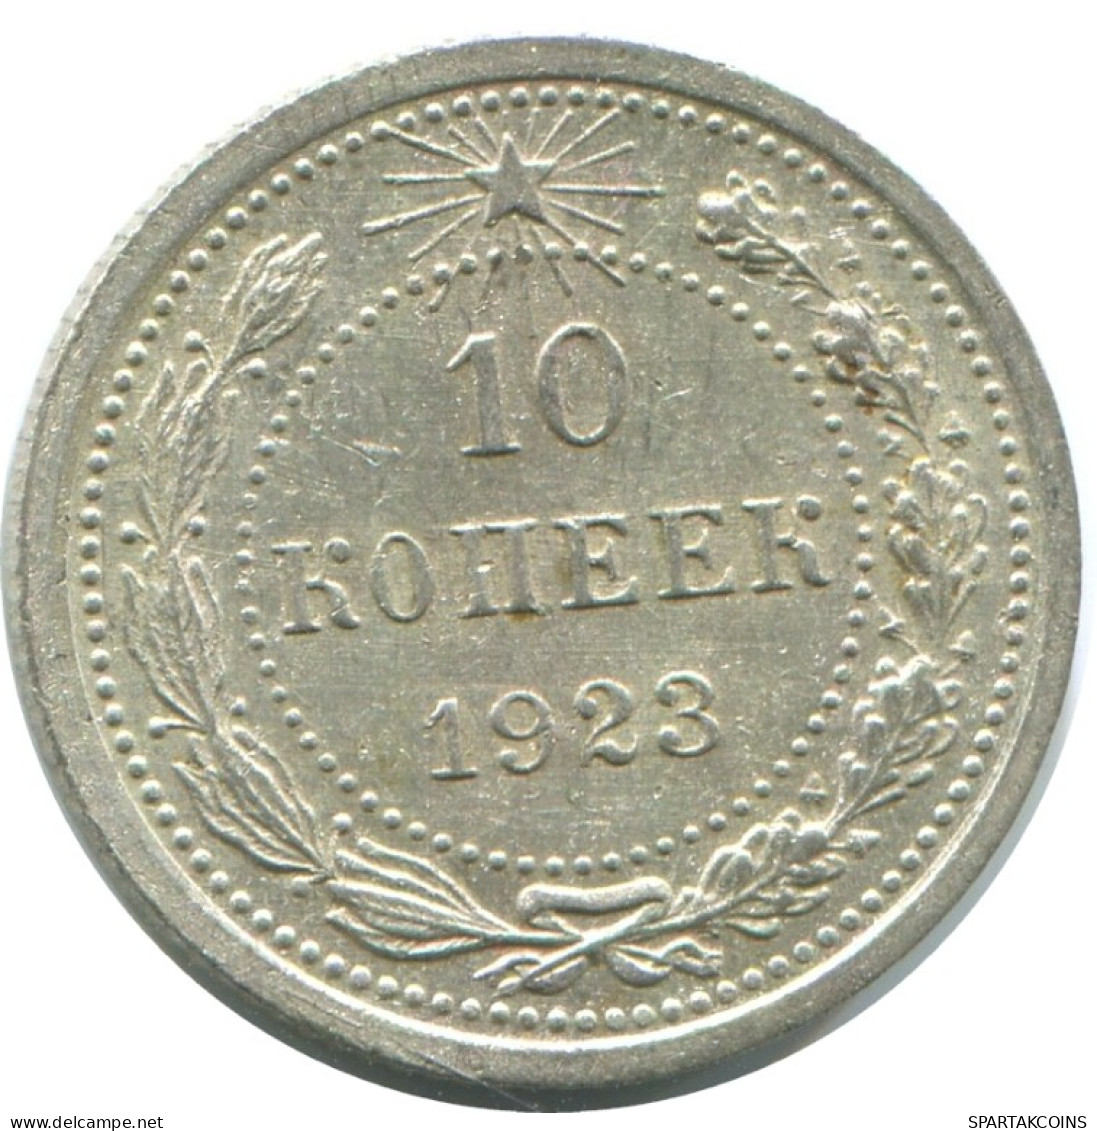 10 KOPEKS 1923 RUSSIA RSFSR SILVER Coin HIGH GRADE #AE918.4.U.A - Russland